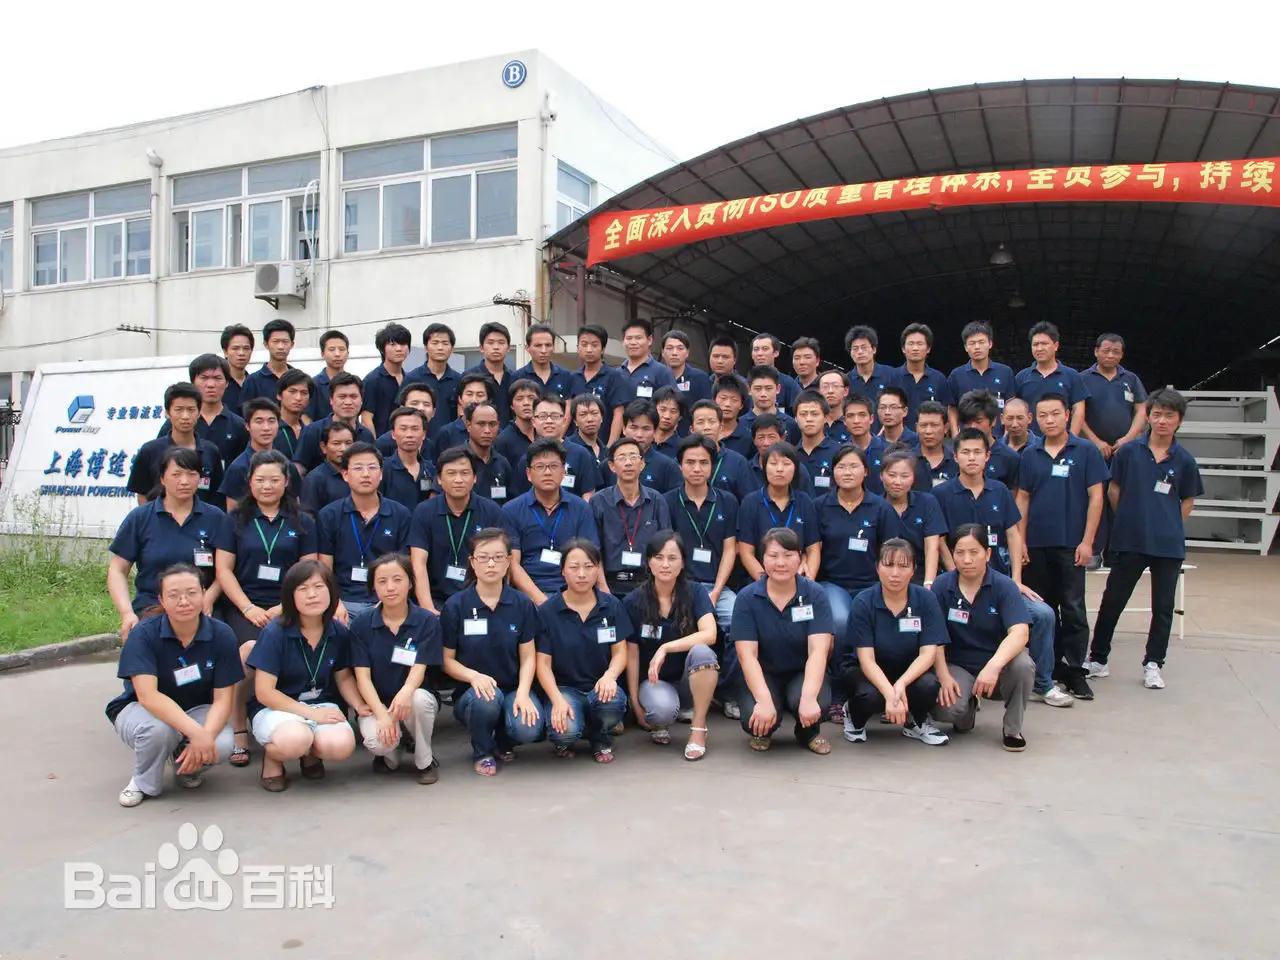 Longwell Industrial Equipment (shanghai) Co., Ltd.